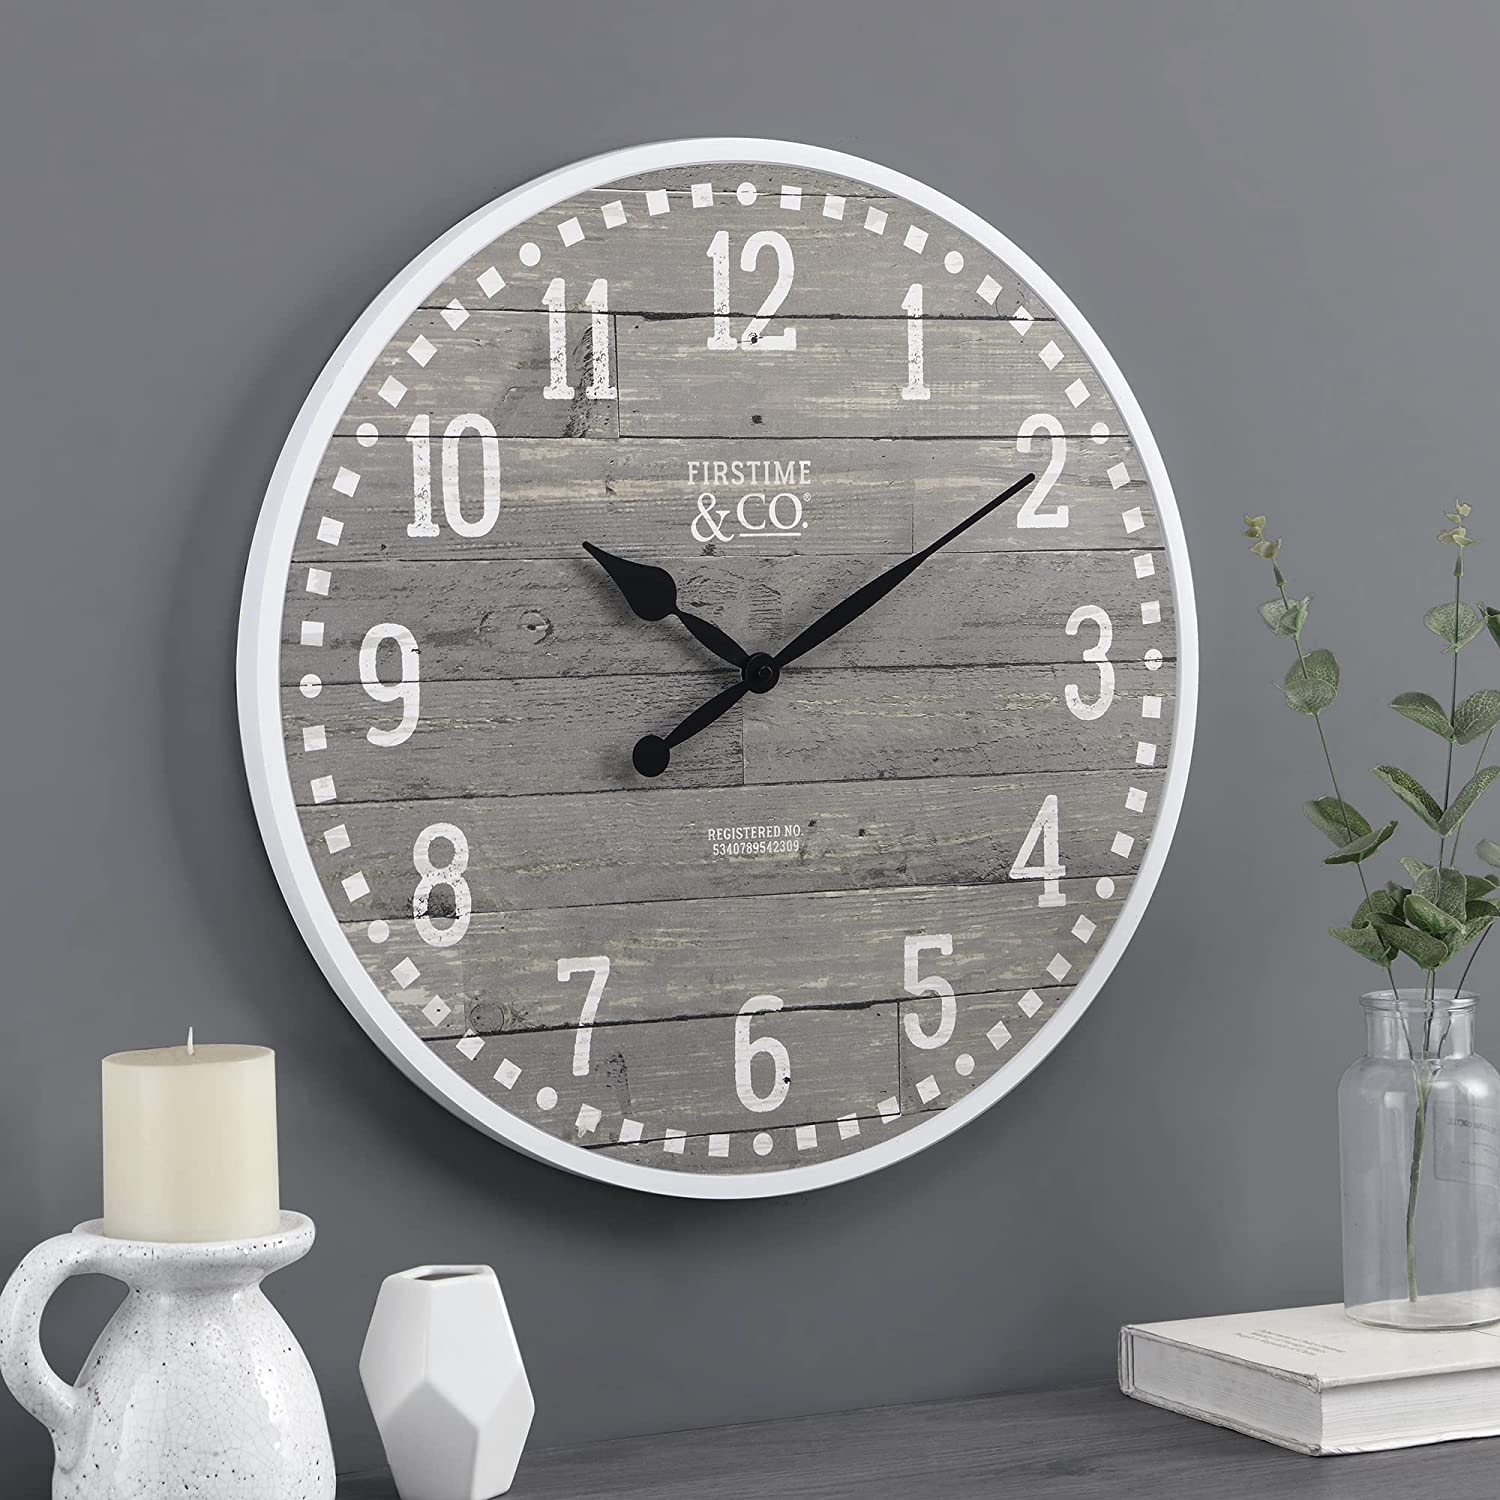 FirsTime & Co. 20" Arlo Gray Wall Clock, Light $9